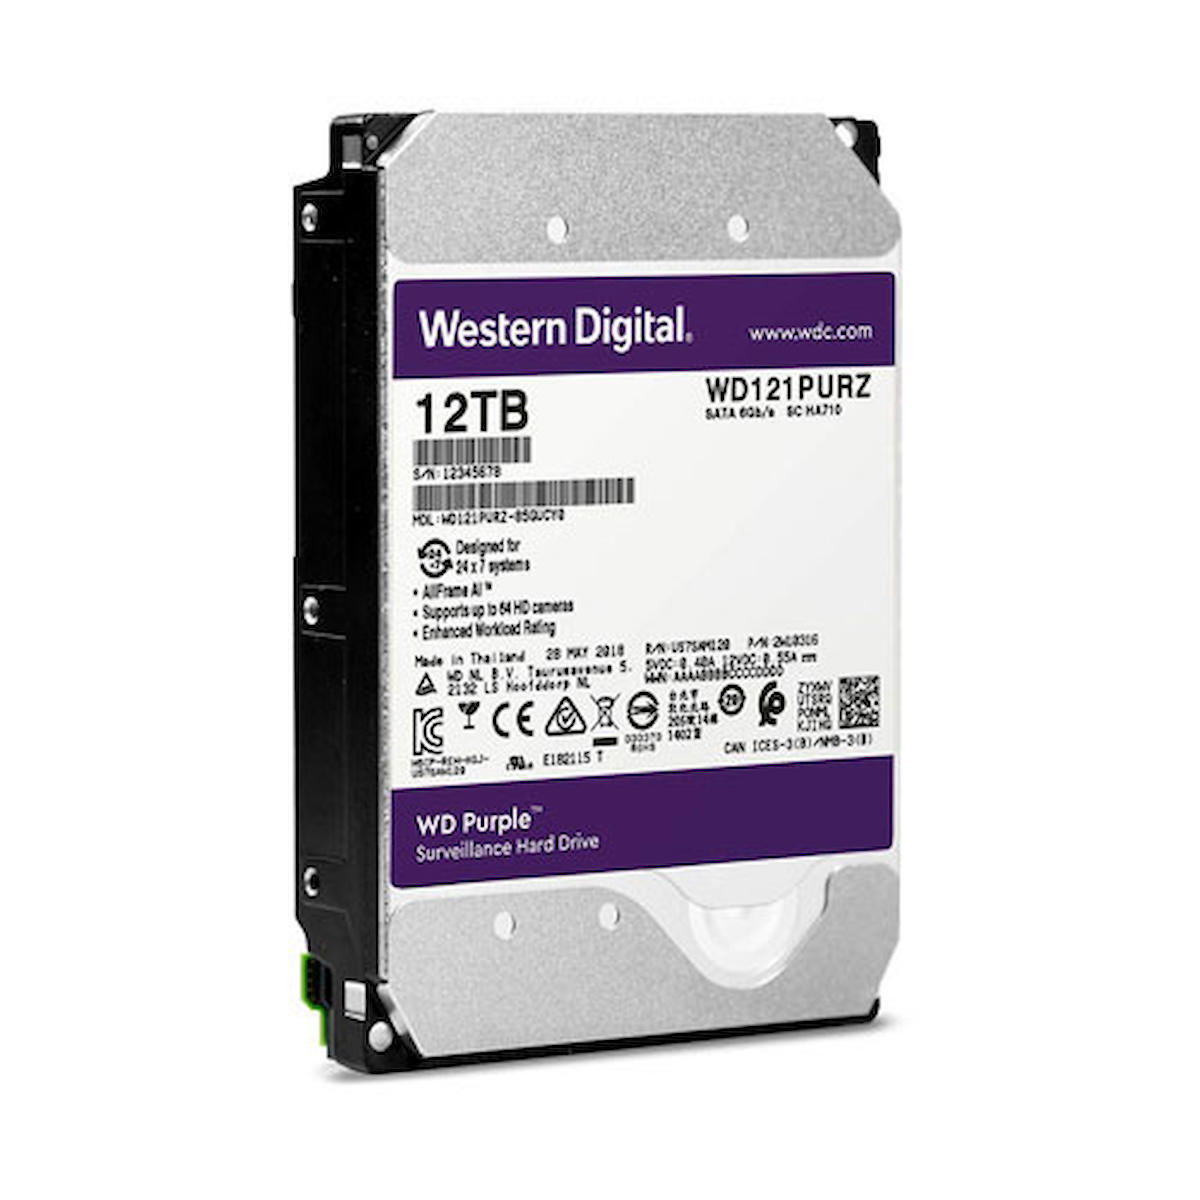 Western Digital WD Purple WD121PURZ 12 TB 3.5 inç 7200 RPM 256 MB SATA 3.0 Güvenlik Kamerası Harddisk